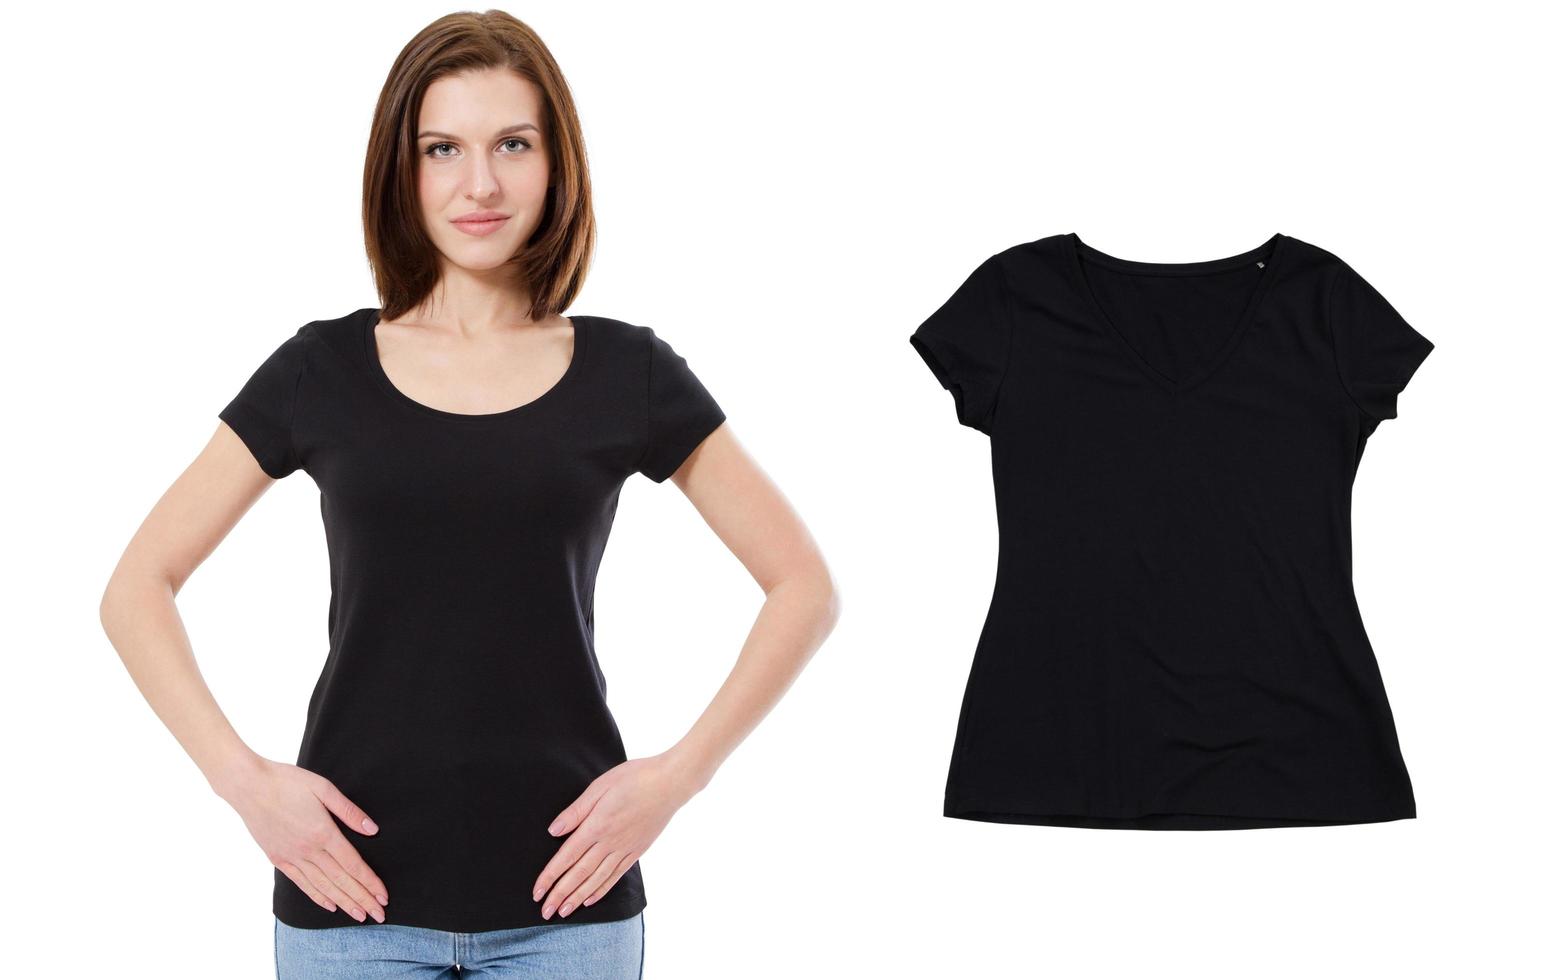 ensemble de t-shirt noir - fille en t-shirt noir gros plan, arrière-plan gros plan t-shirt photo